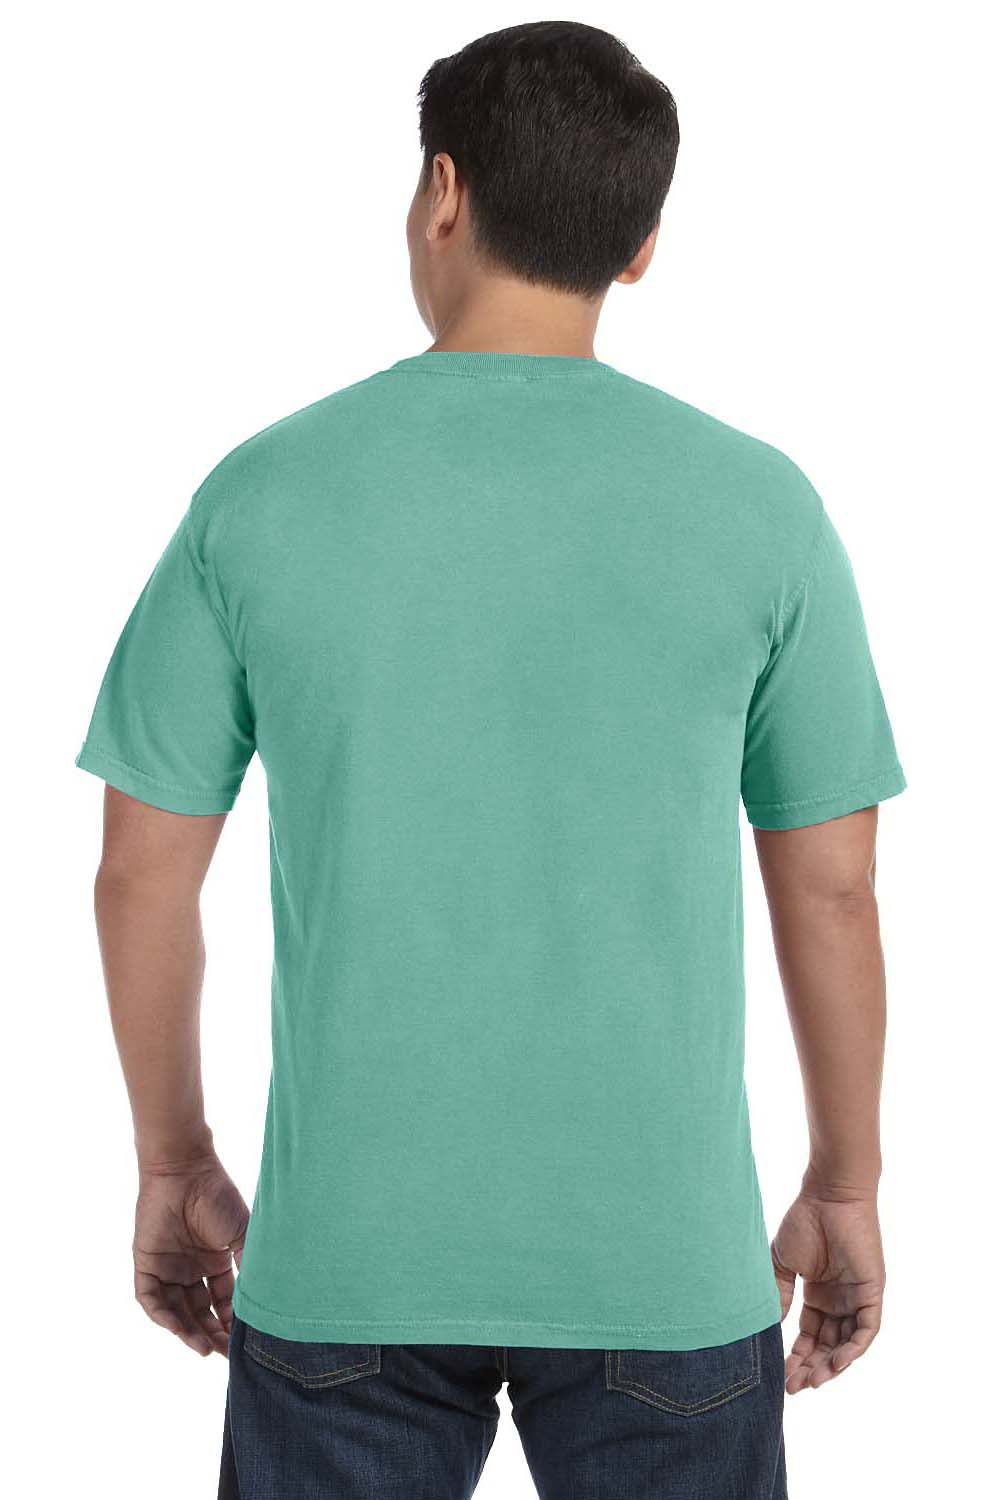 Comfort Colors C1717 Mens Short Sleeve Crewneck T-Shirt Island Reef Green Back